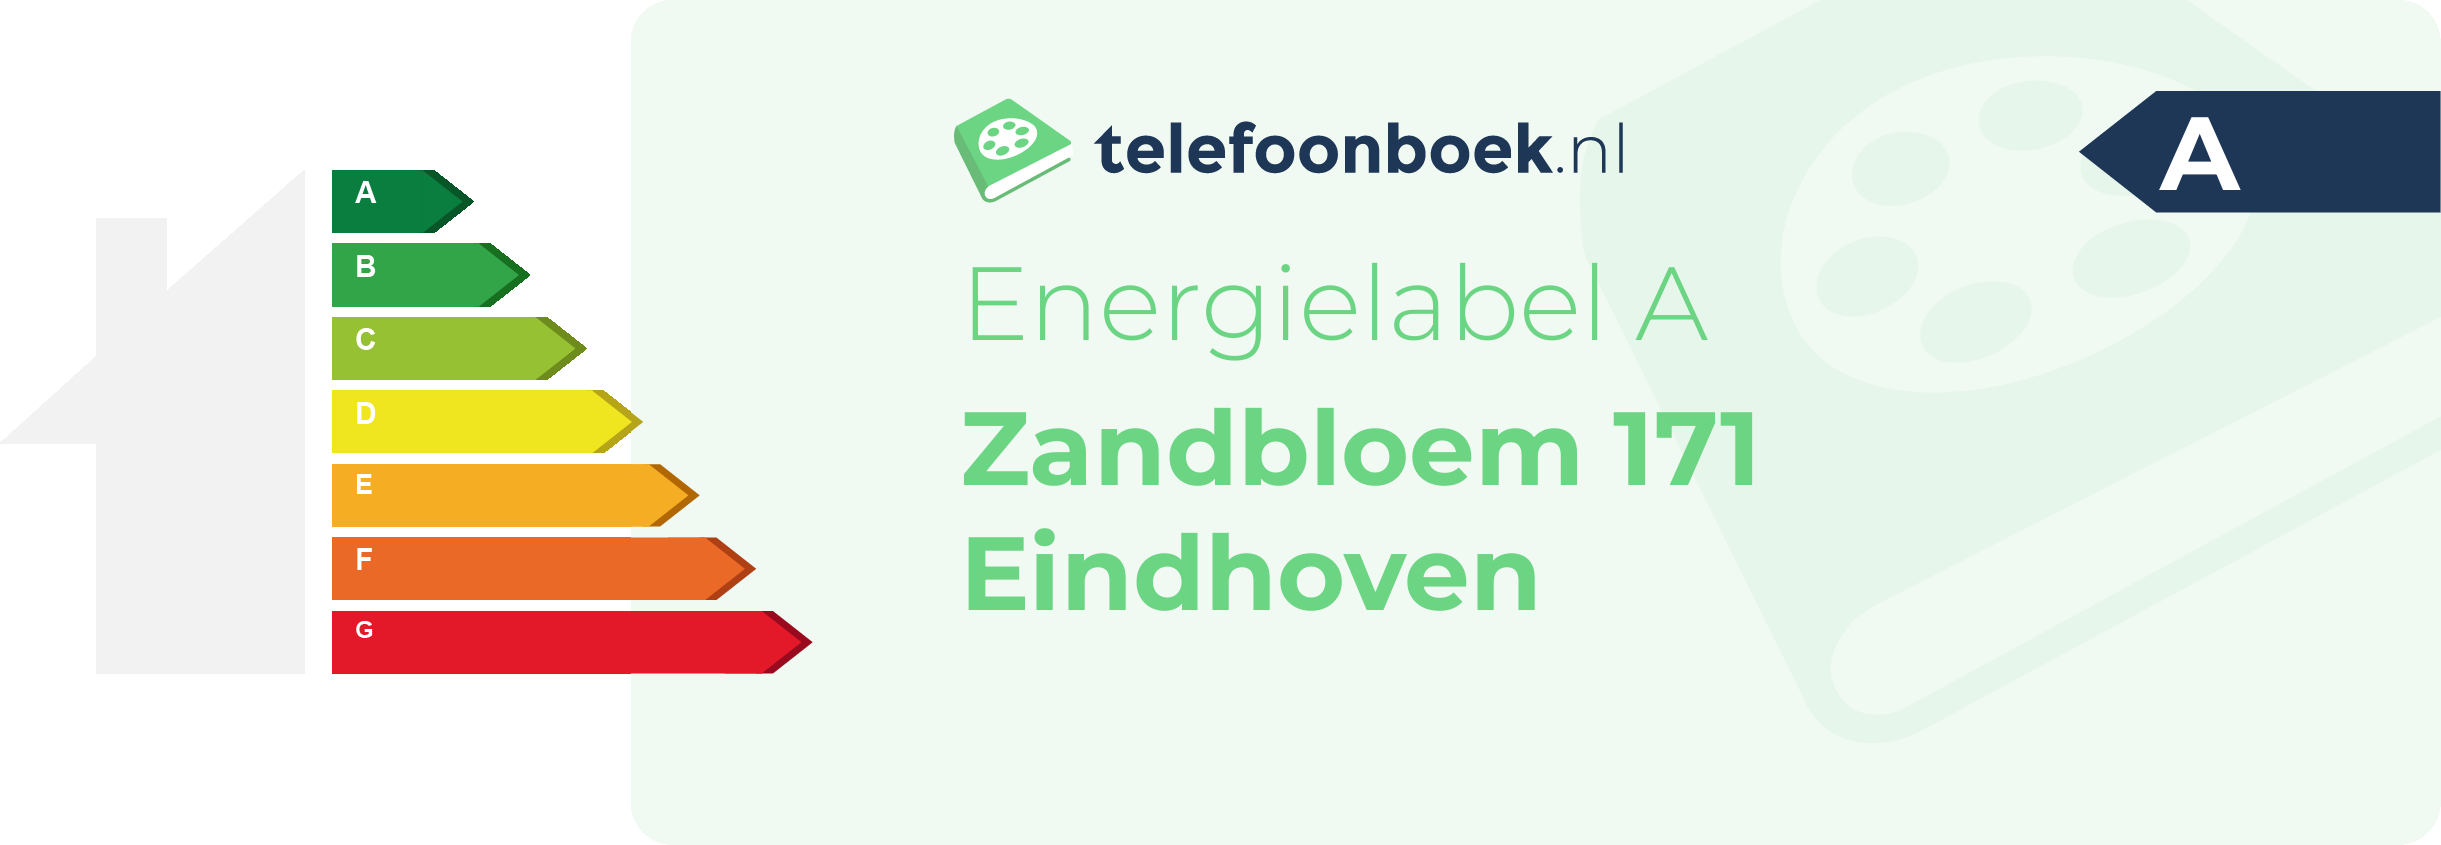 Energielabel Zandbloem 171 Eindhoven